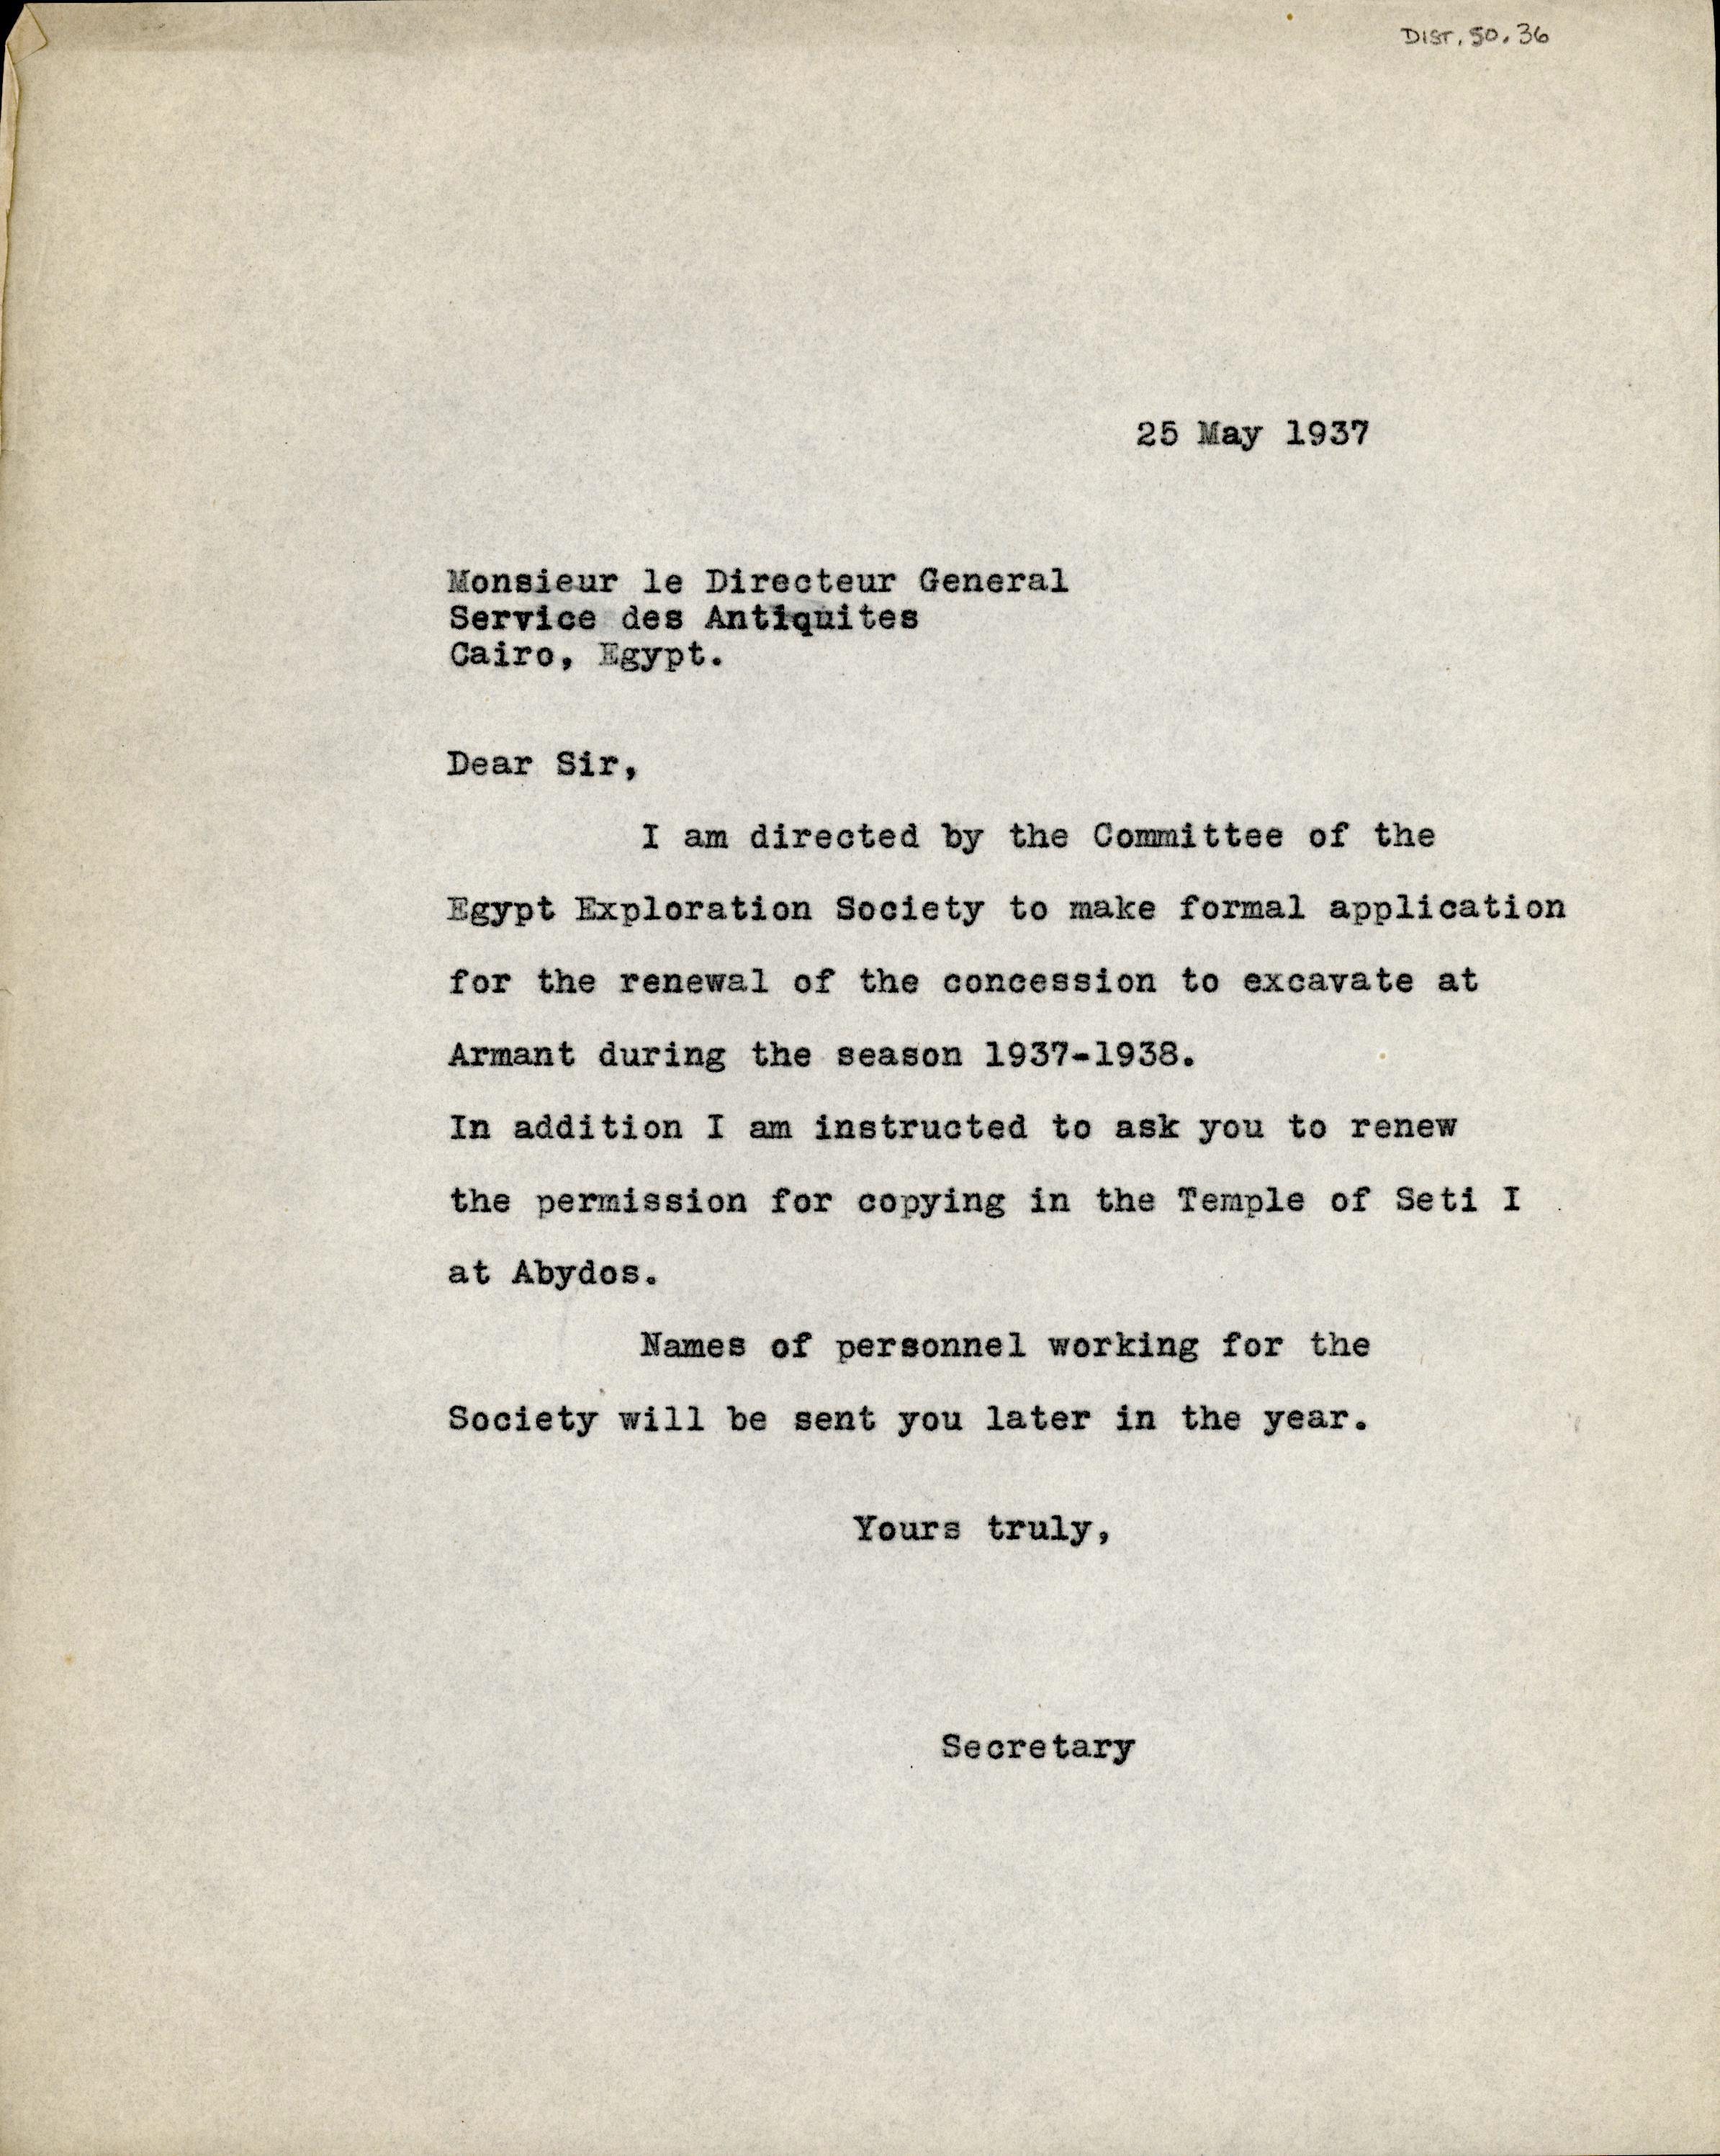 1926-39 correspondence with Antiquities Service DIST.50.36